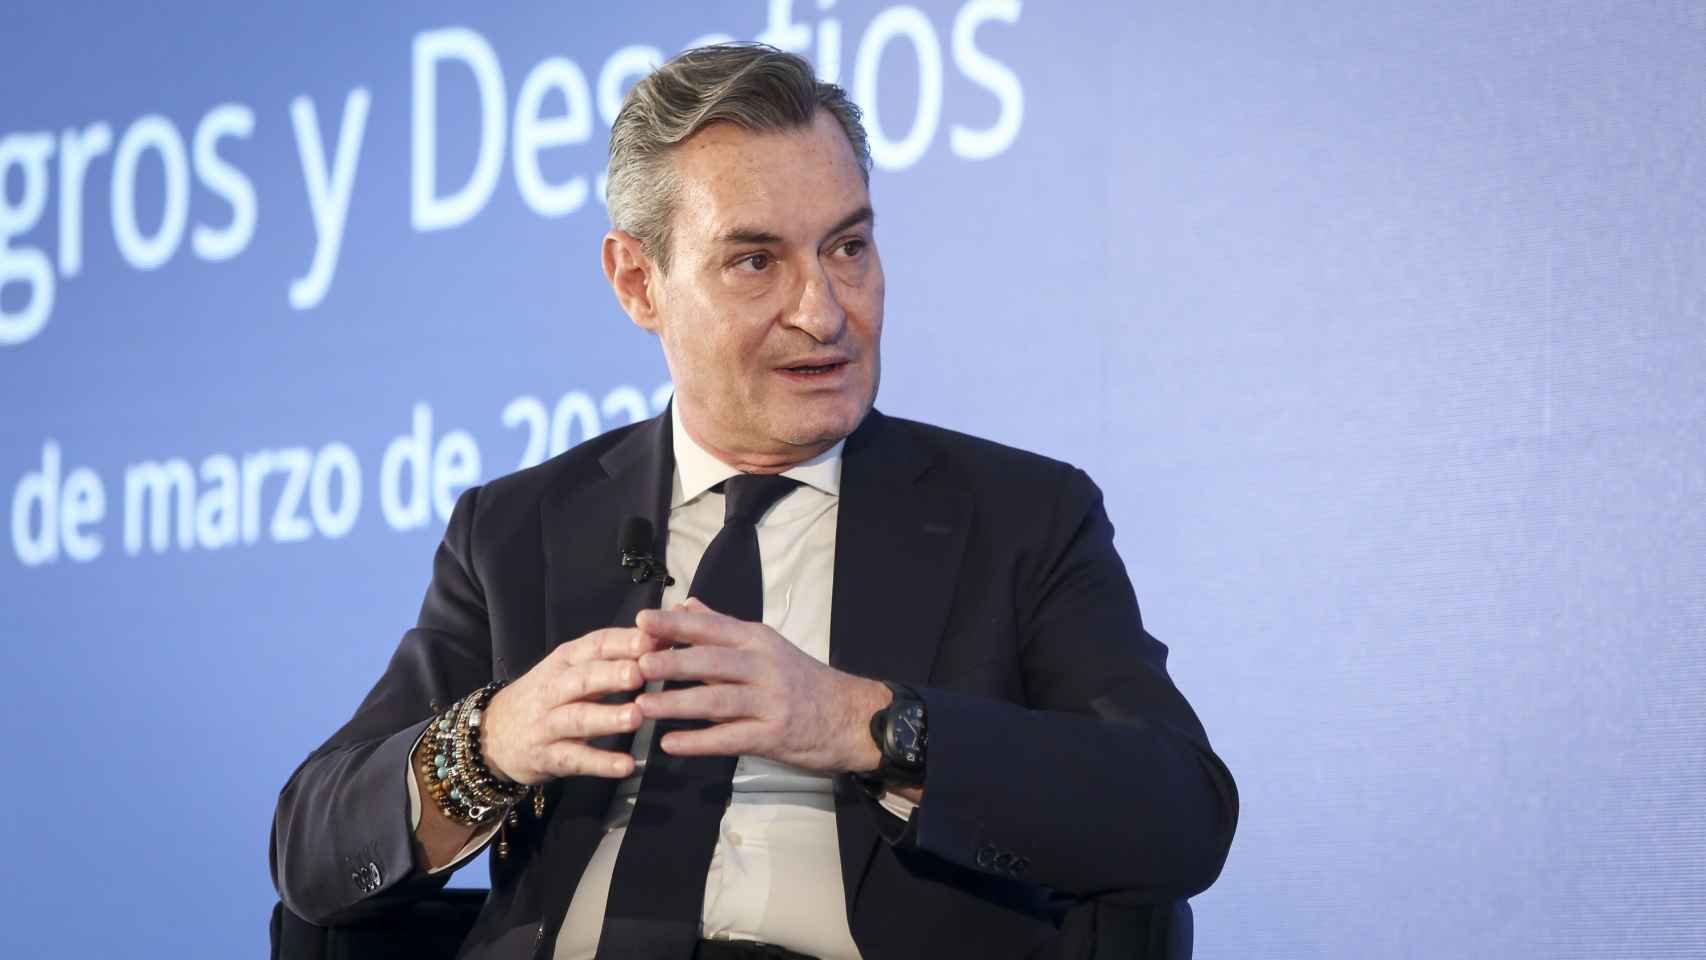 Jaume Miquel, presidente de Tendam